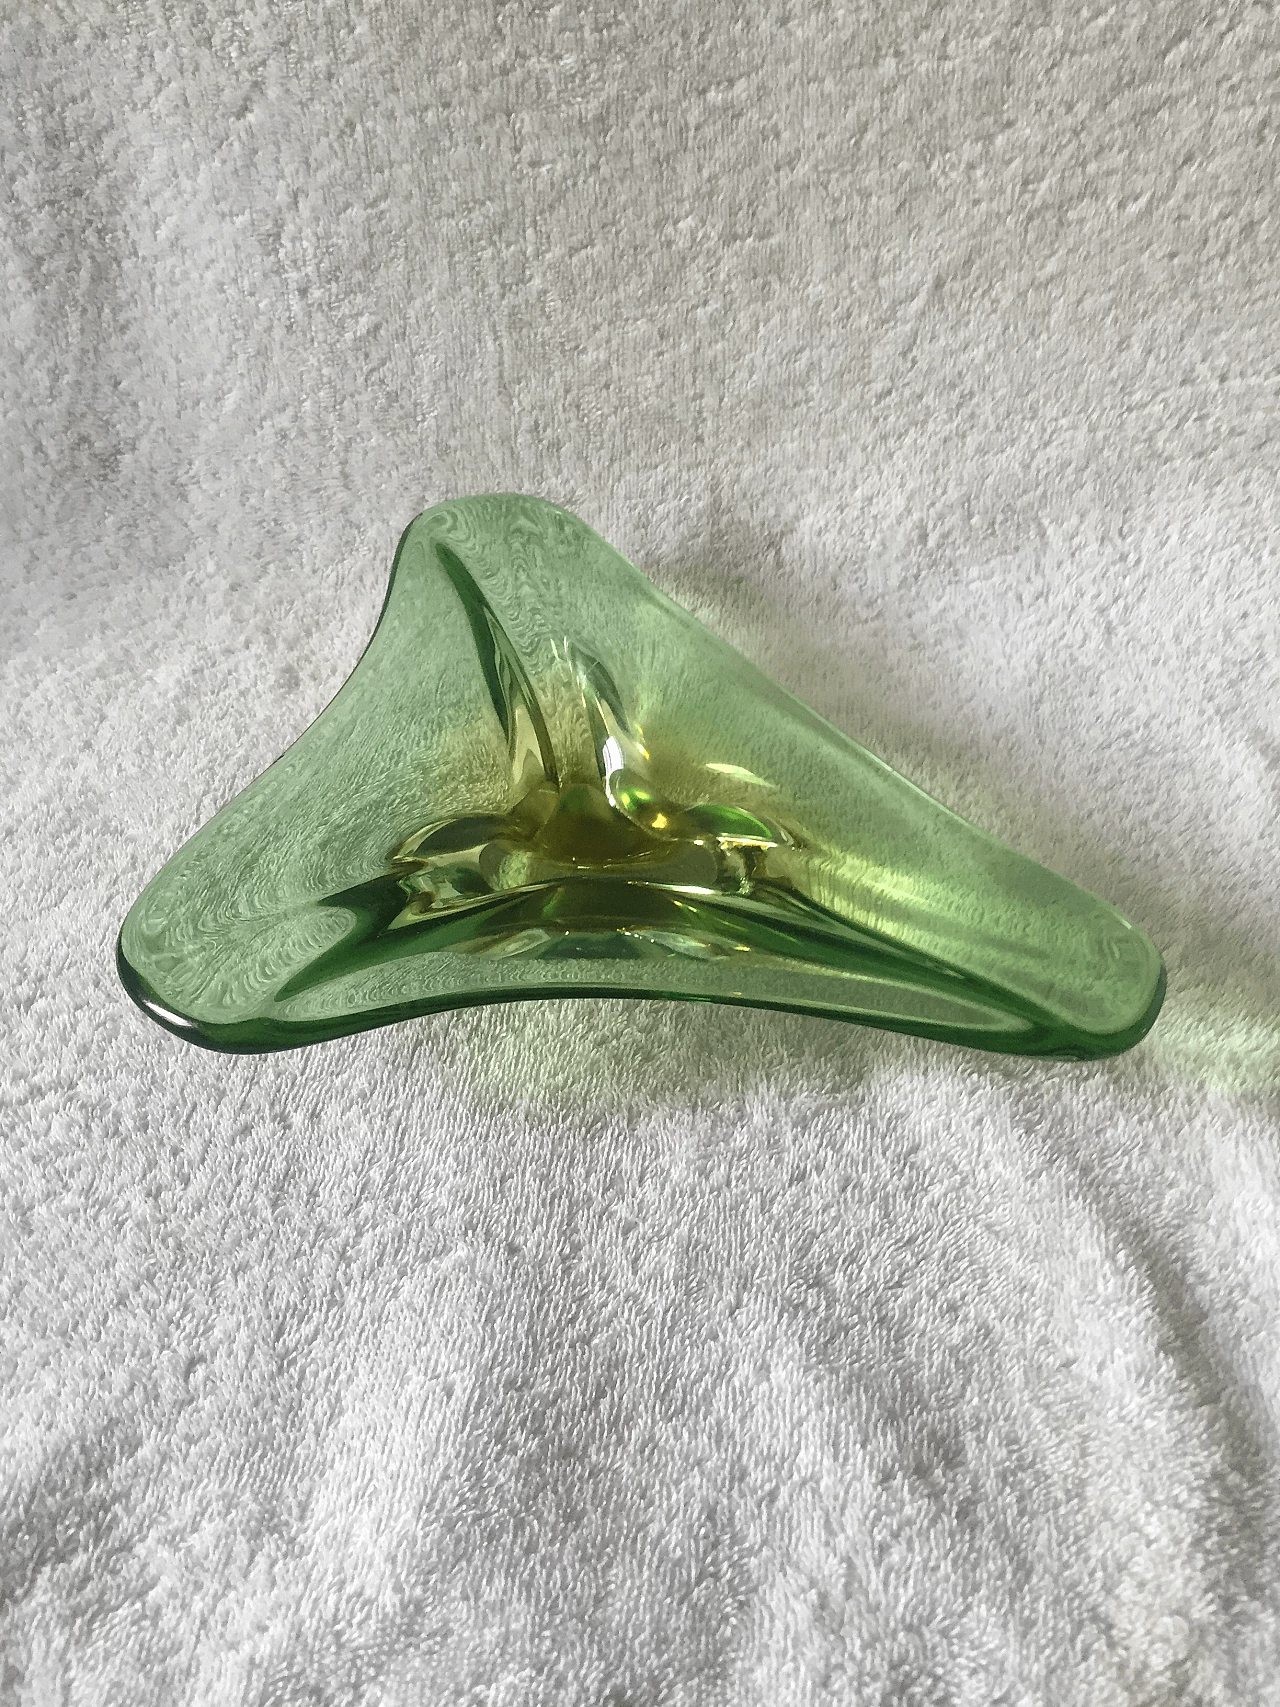 Seguso green Murano glass ashtray, 1970s 1367374